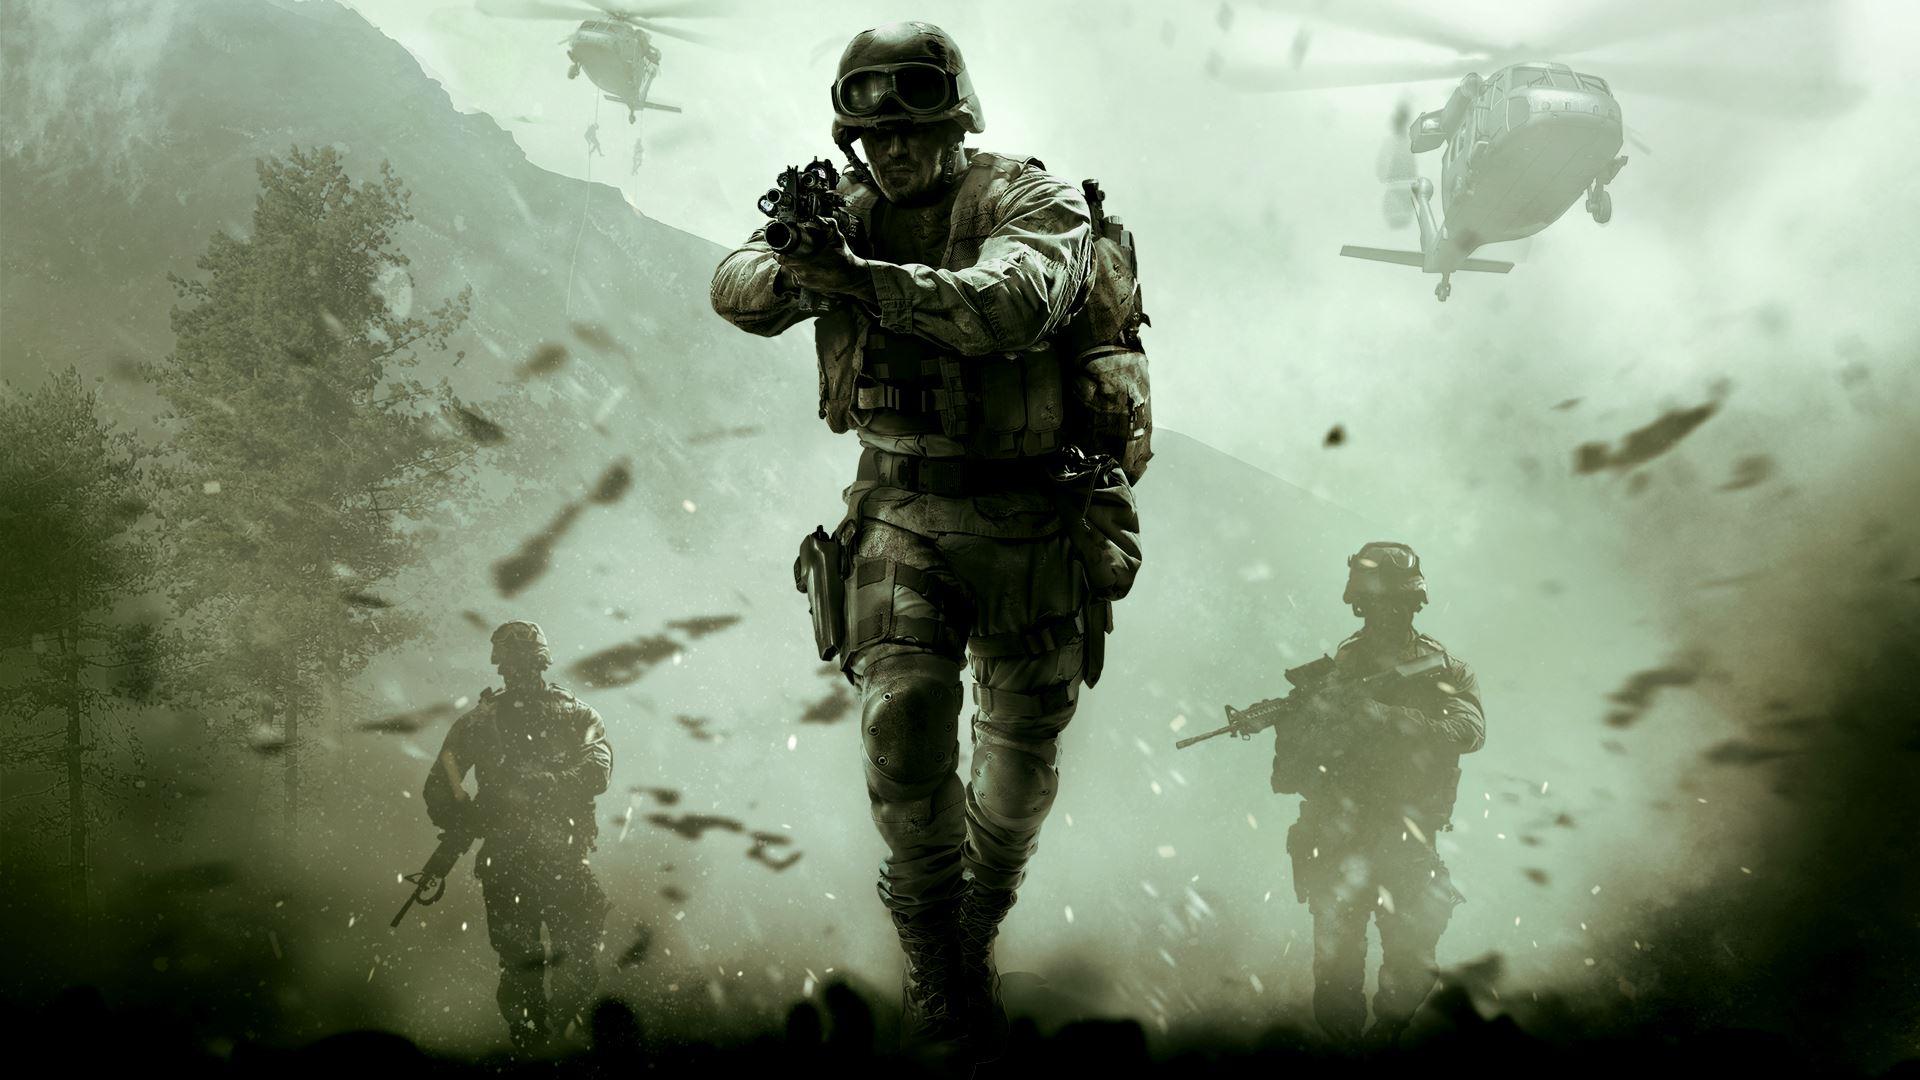 Call of Duty Modern Warfare 2 : Old Games in 4K 